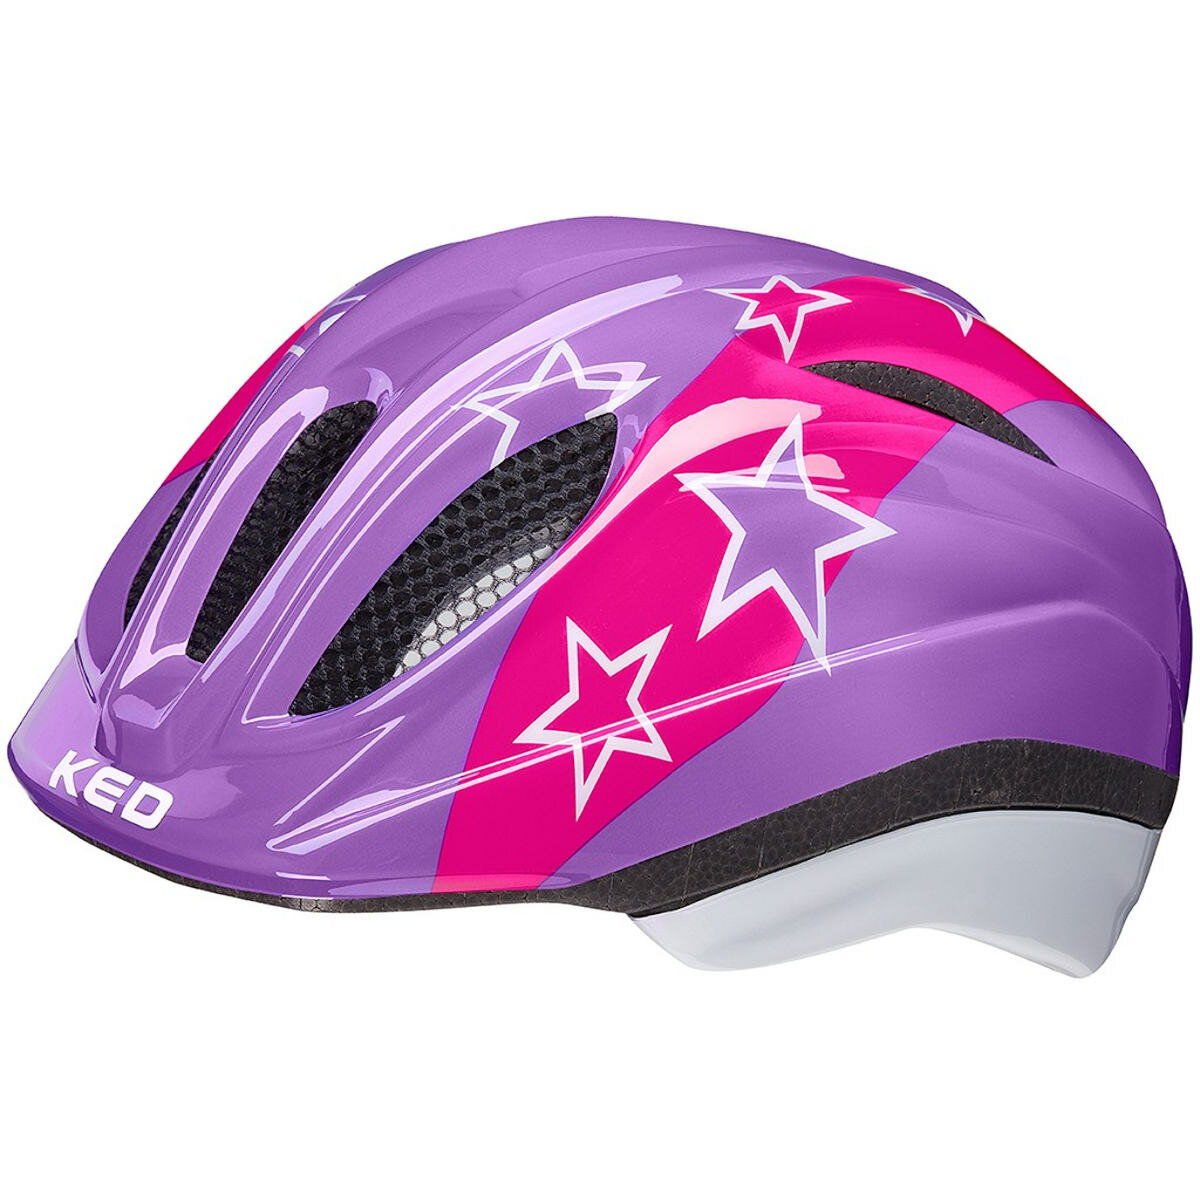 KED Fahrradhelm Meggy II Trend lilac stars, 39,95 €